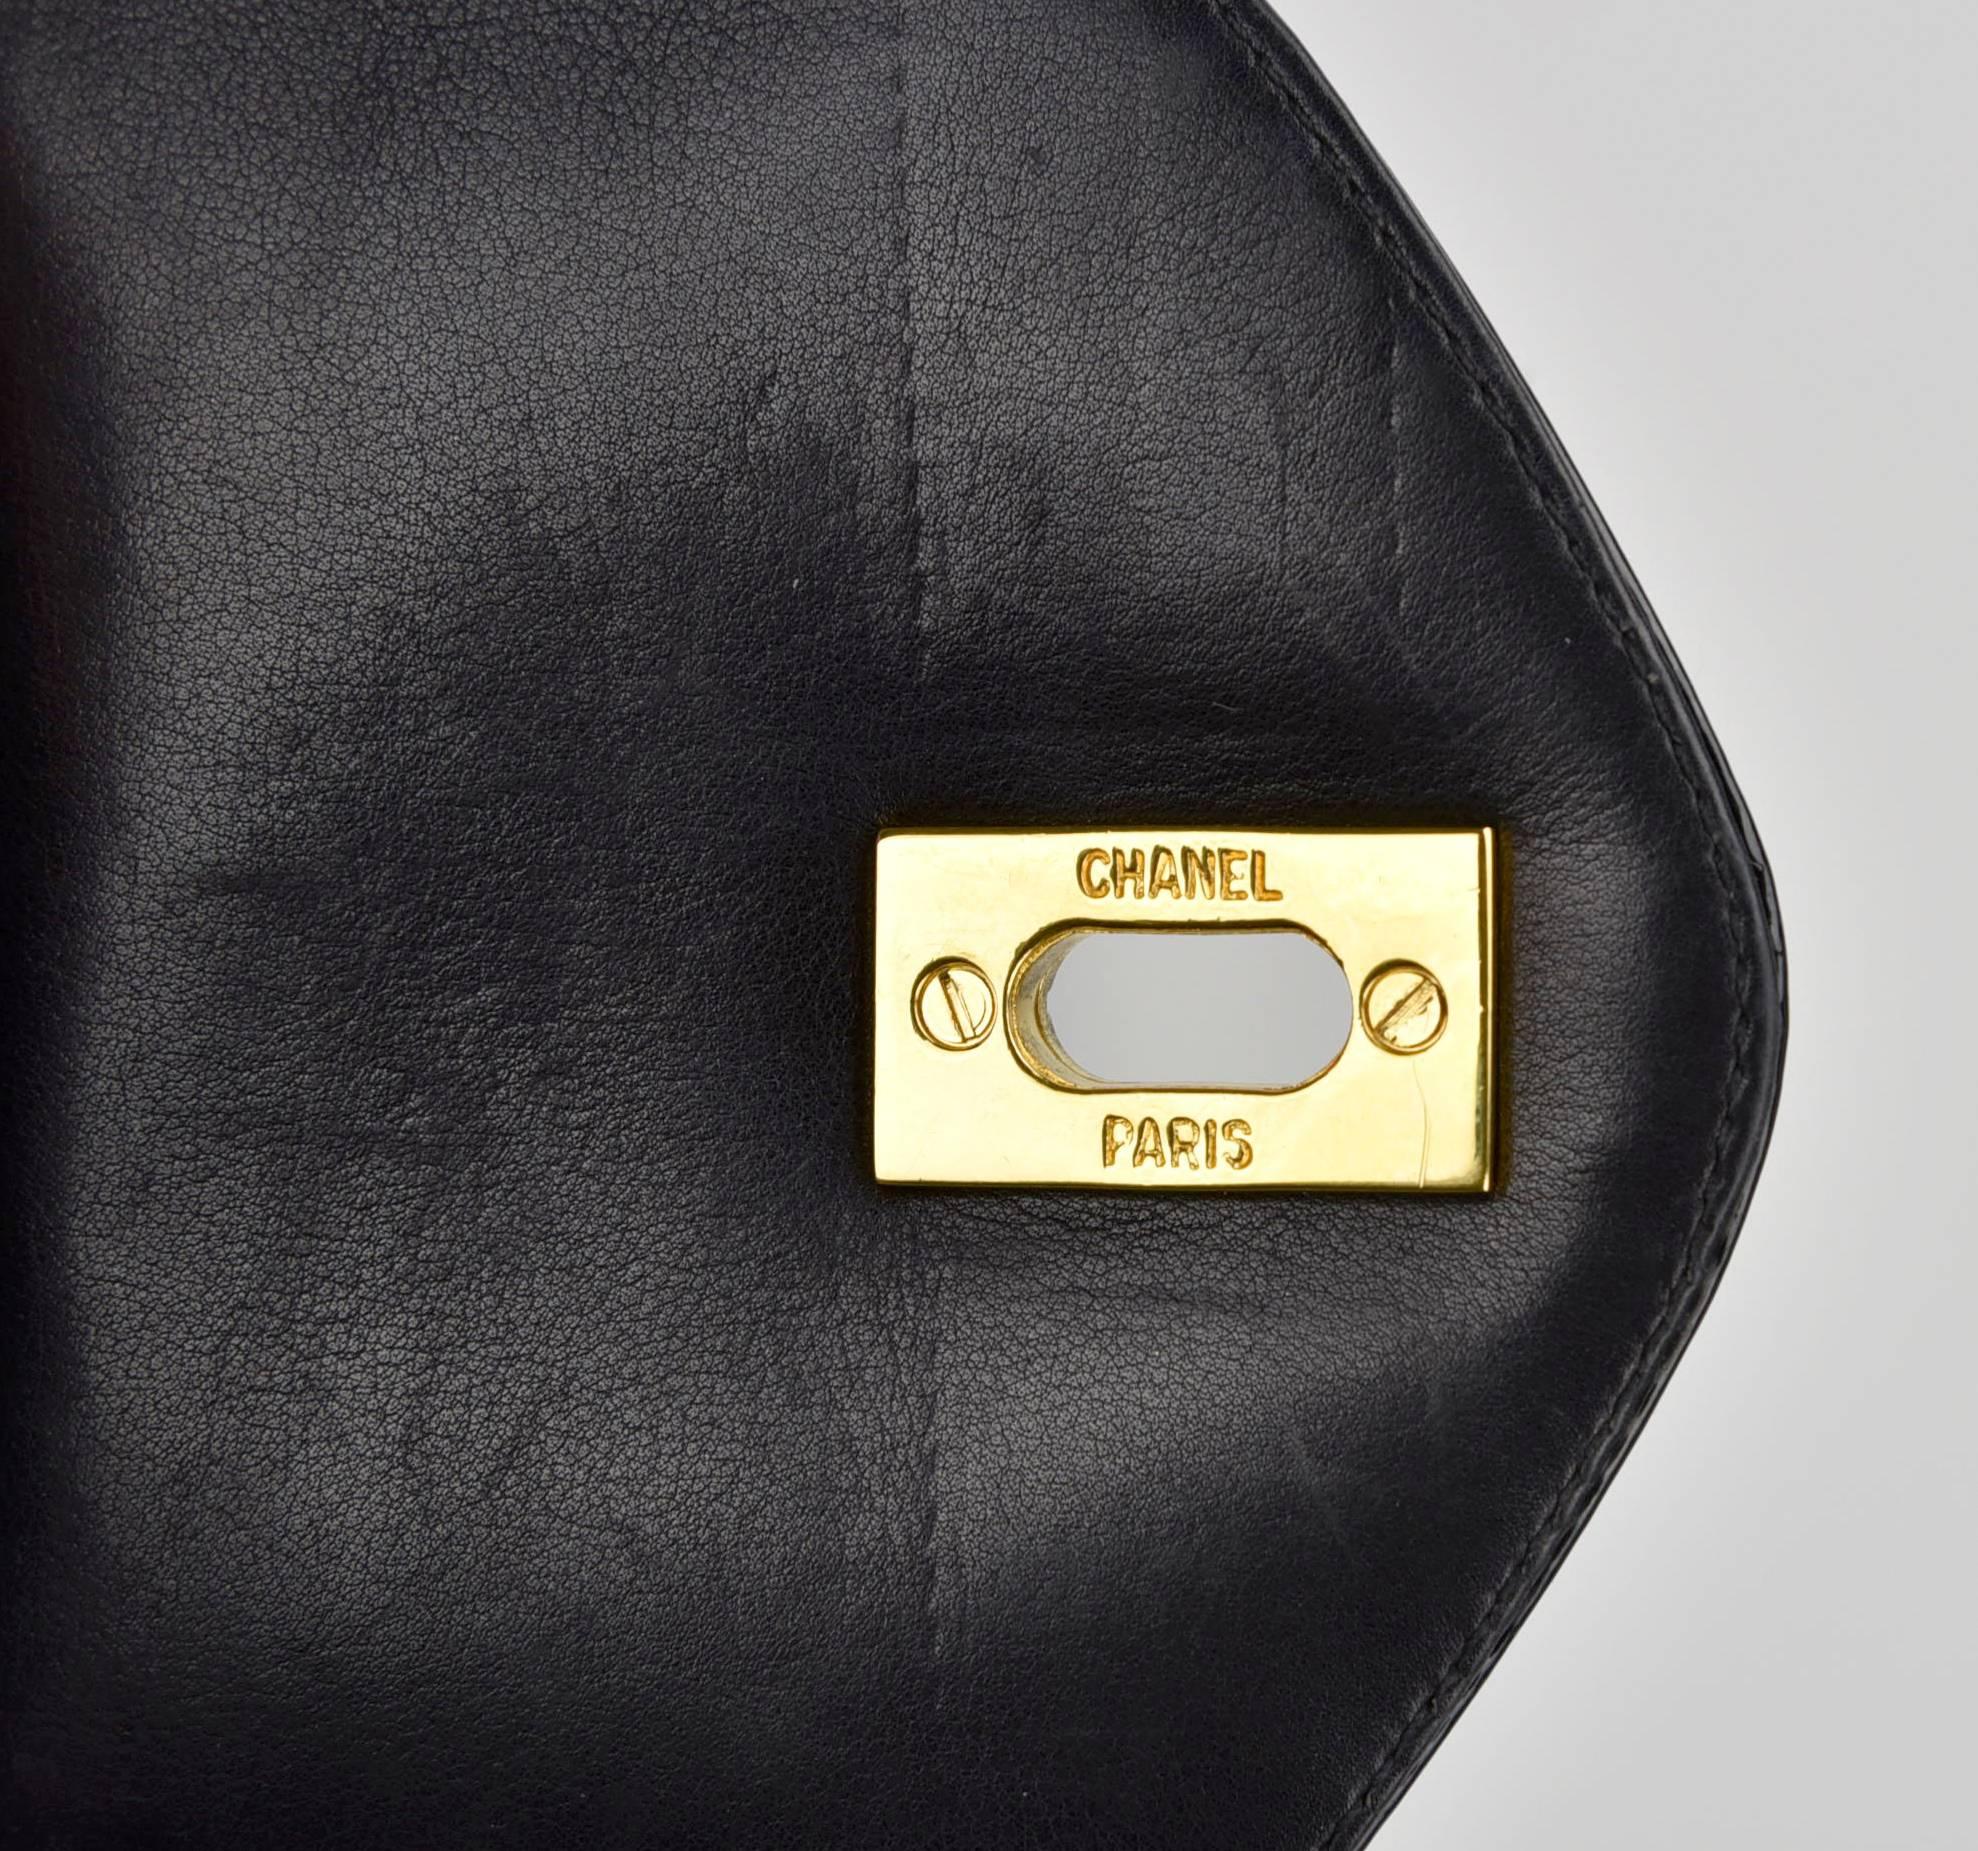 Circa 1996 Chanel Black Patent Oversized Classic Shoulder Bag For Sale 2